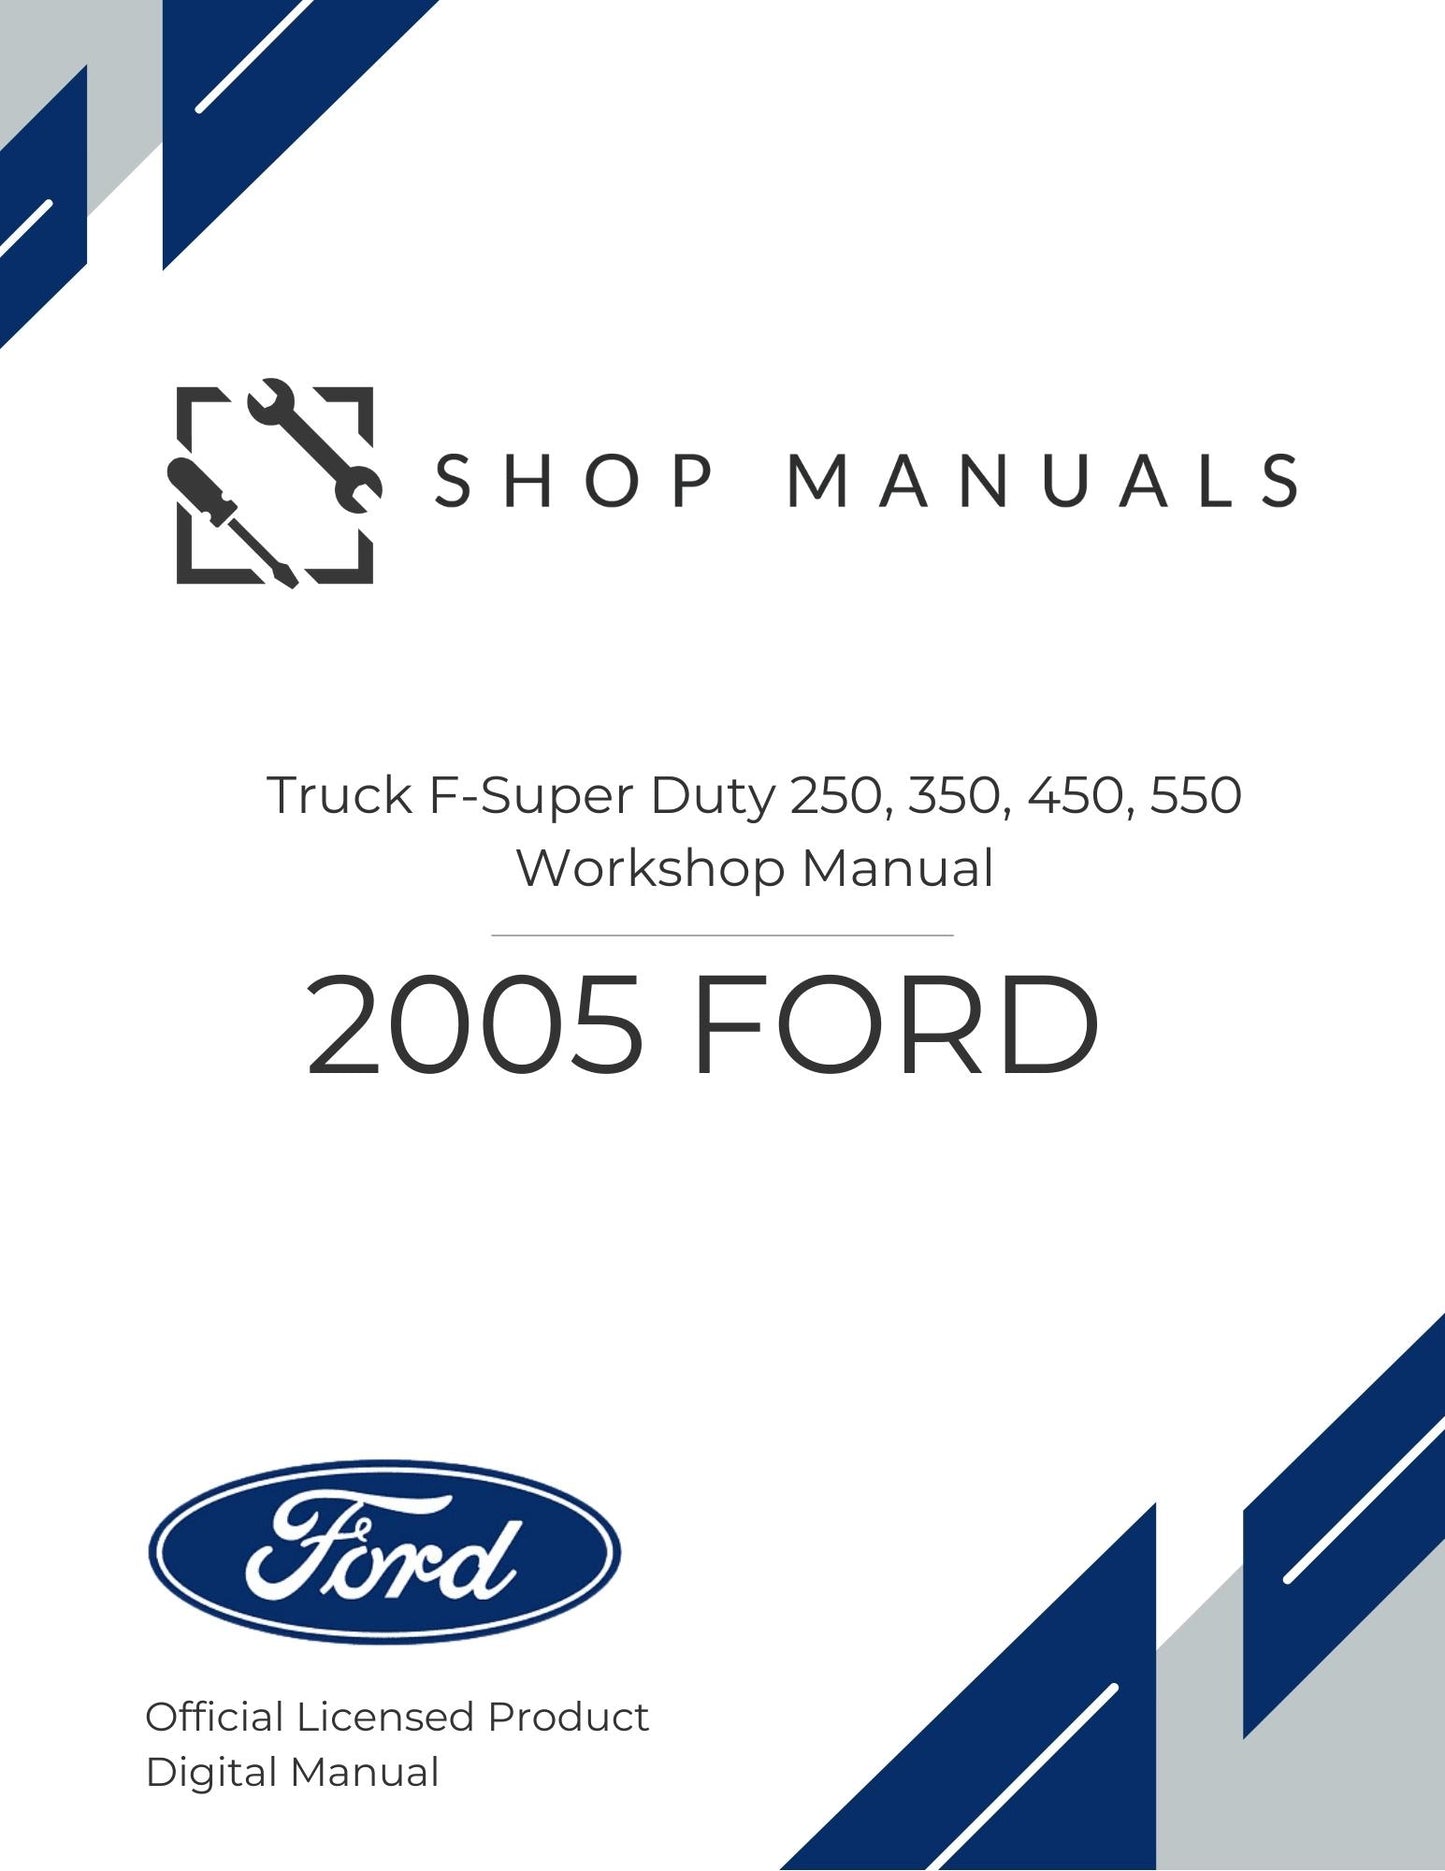 2005 Ford Truck F-super Duty 250, 350, 450, 550 Workshop Manual